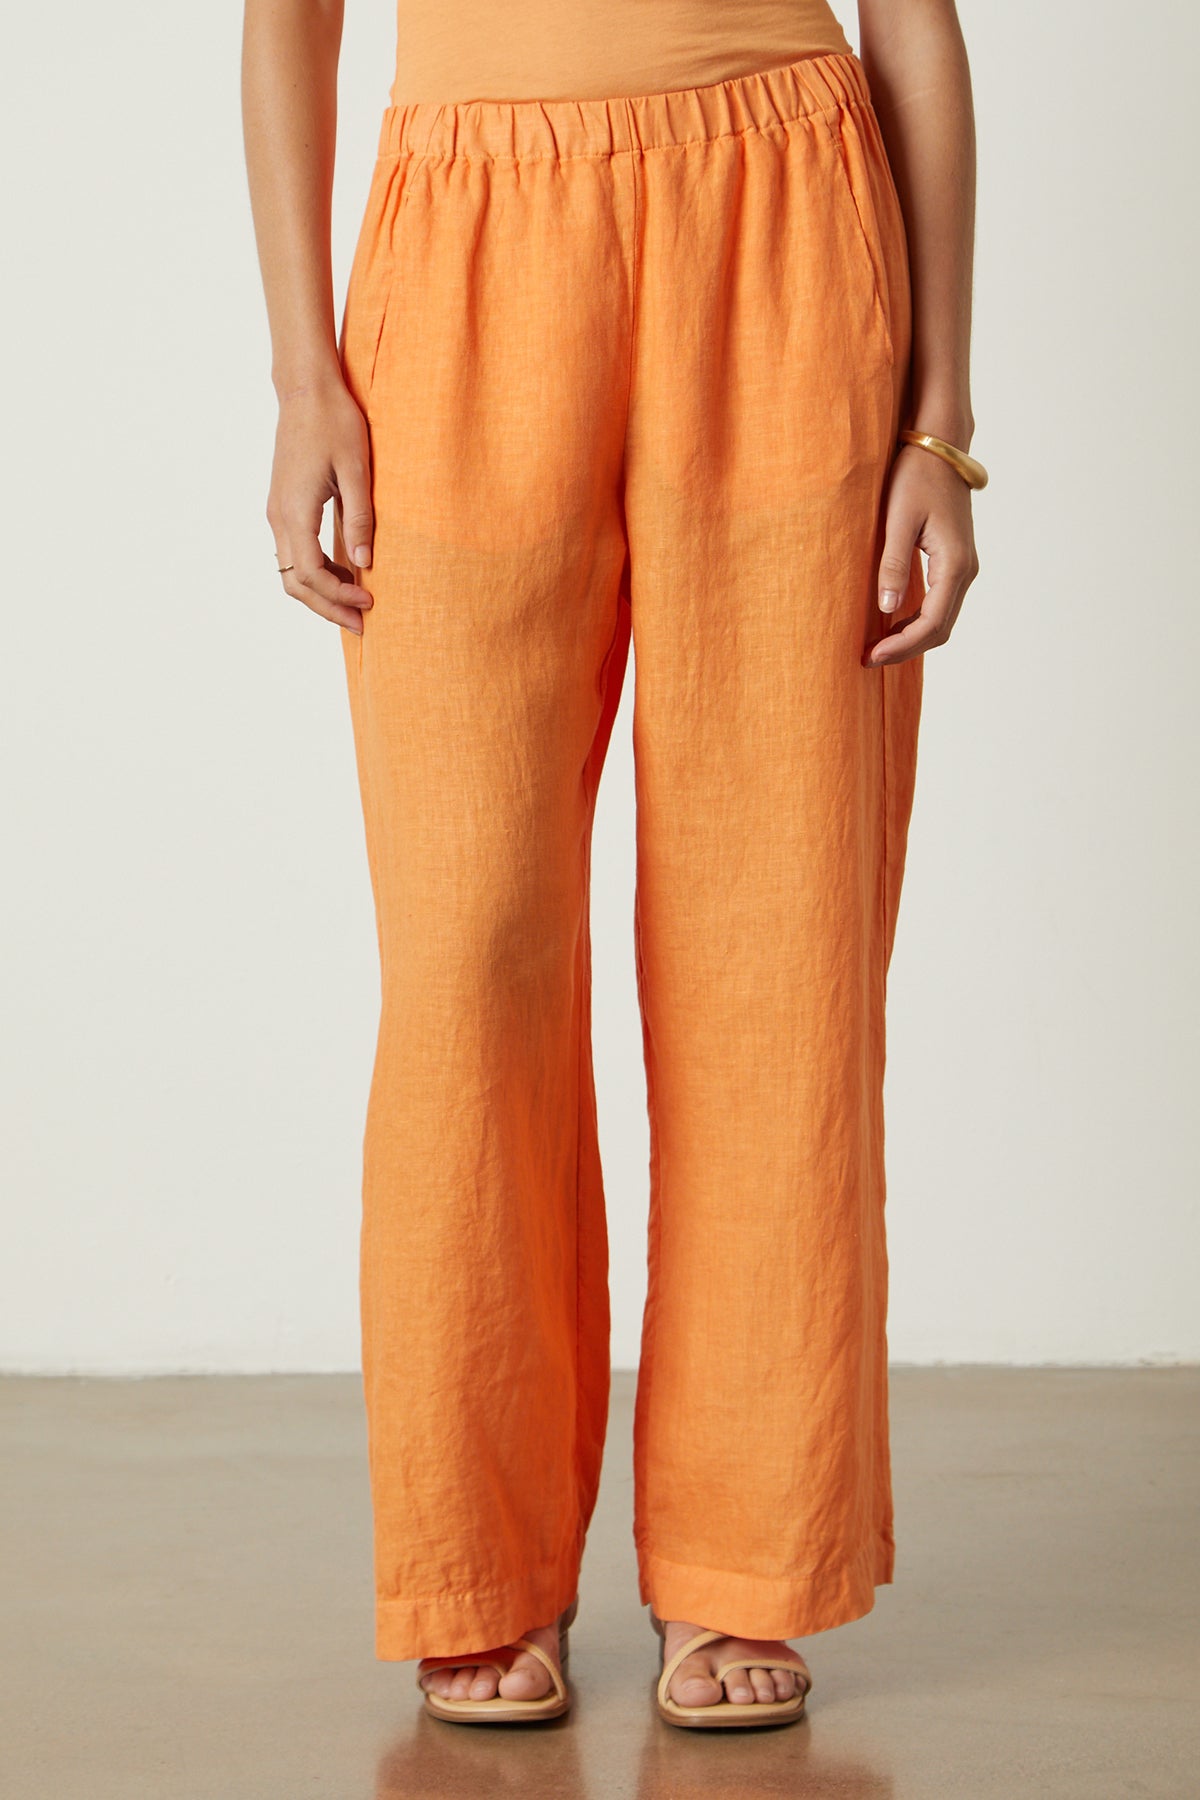 Lola pant in orange heat linen front-26022719389889